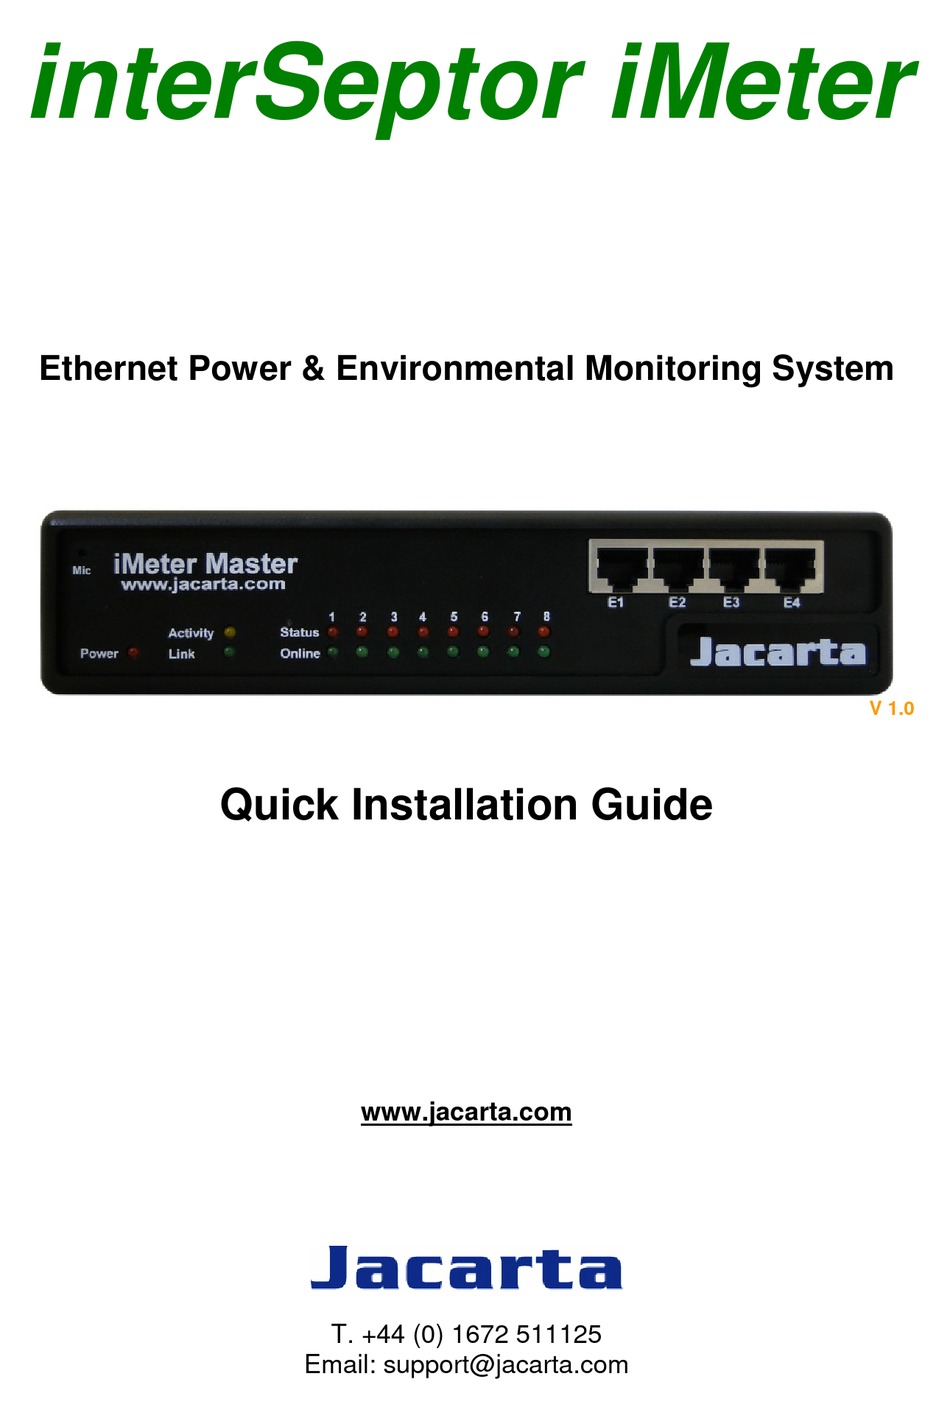 interSeptor Environmental Monitoring - Jacarta